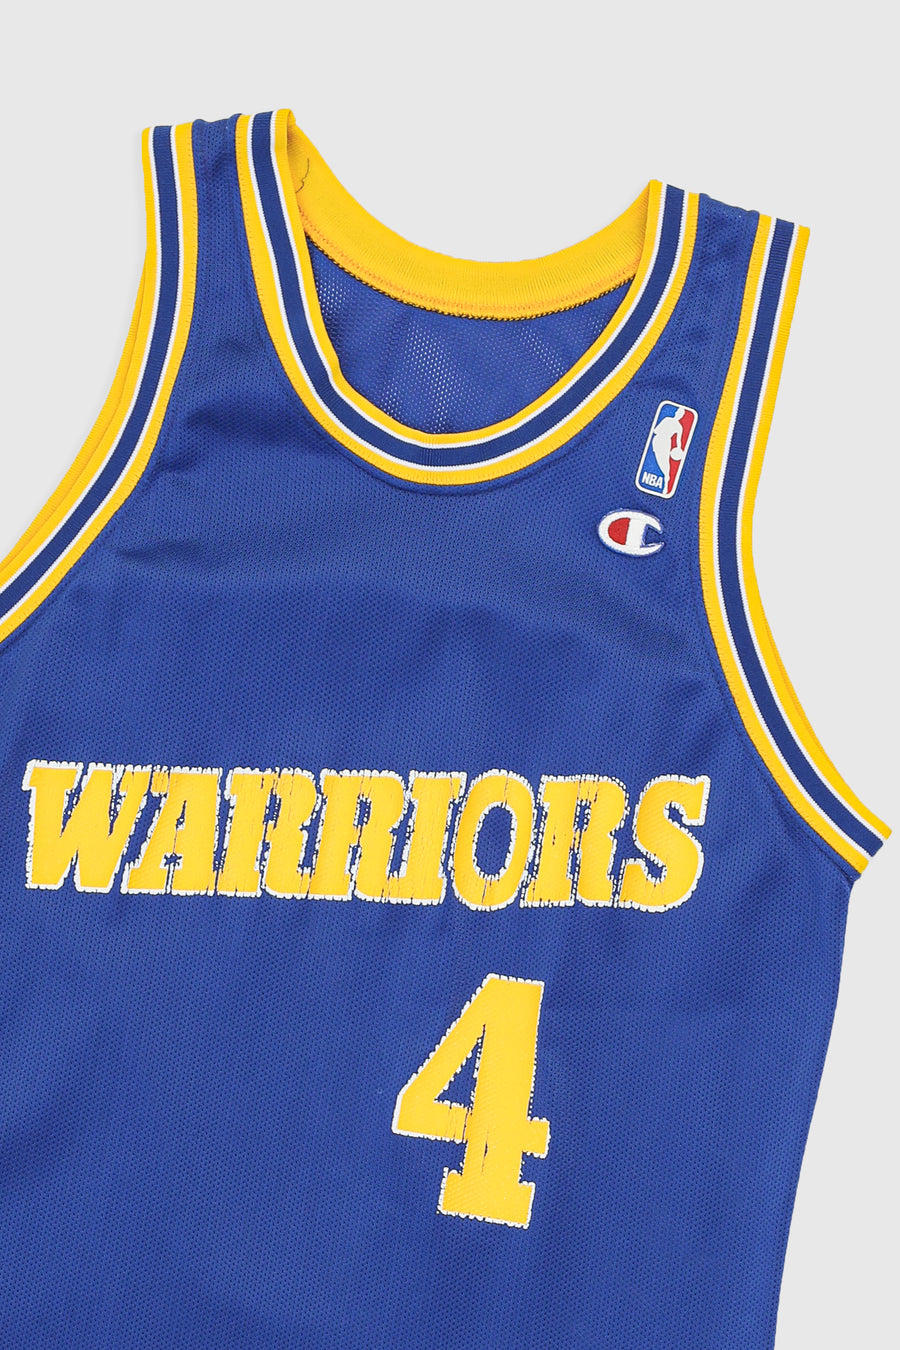 Vintage Warriors NBA Jersey